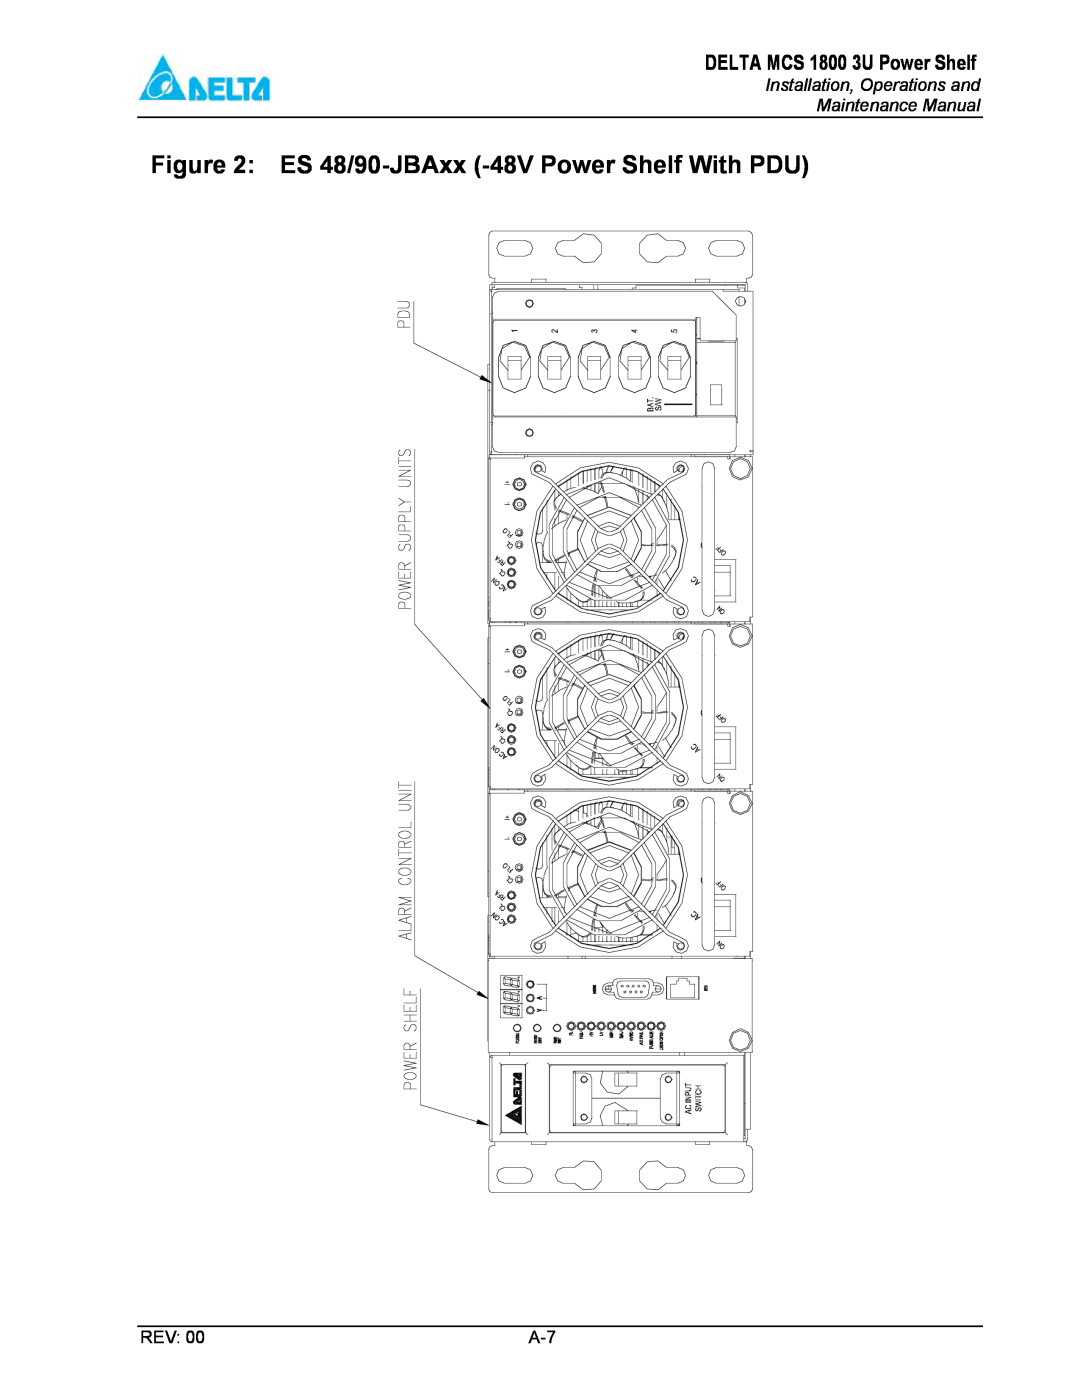 Delta MCS-1800 manual ES 48/90-JBAxx -48V Power Shelf With PDU, DELTA MCS 1800 3U Power Shelf 